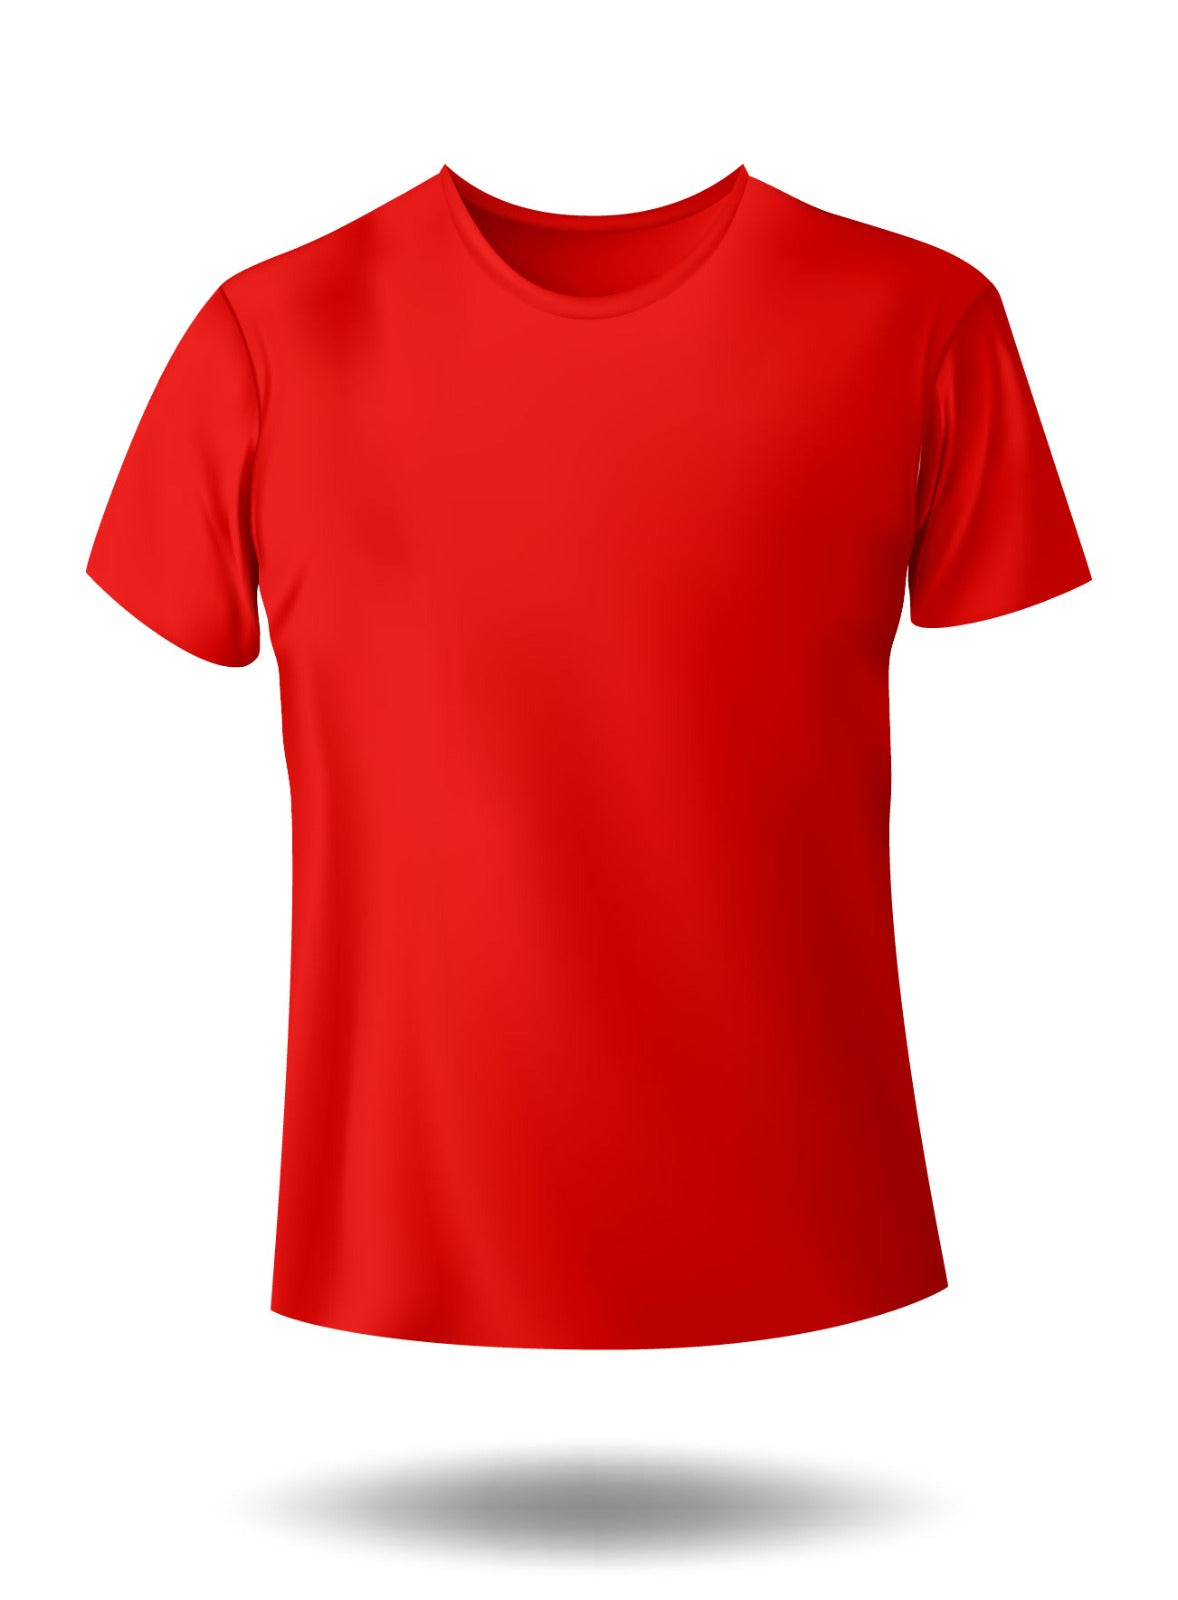 Red t-shirt | plain